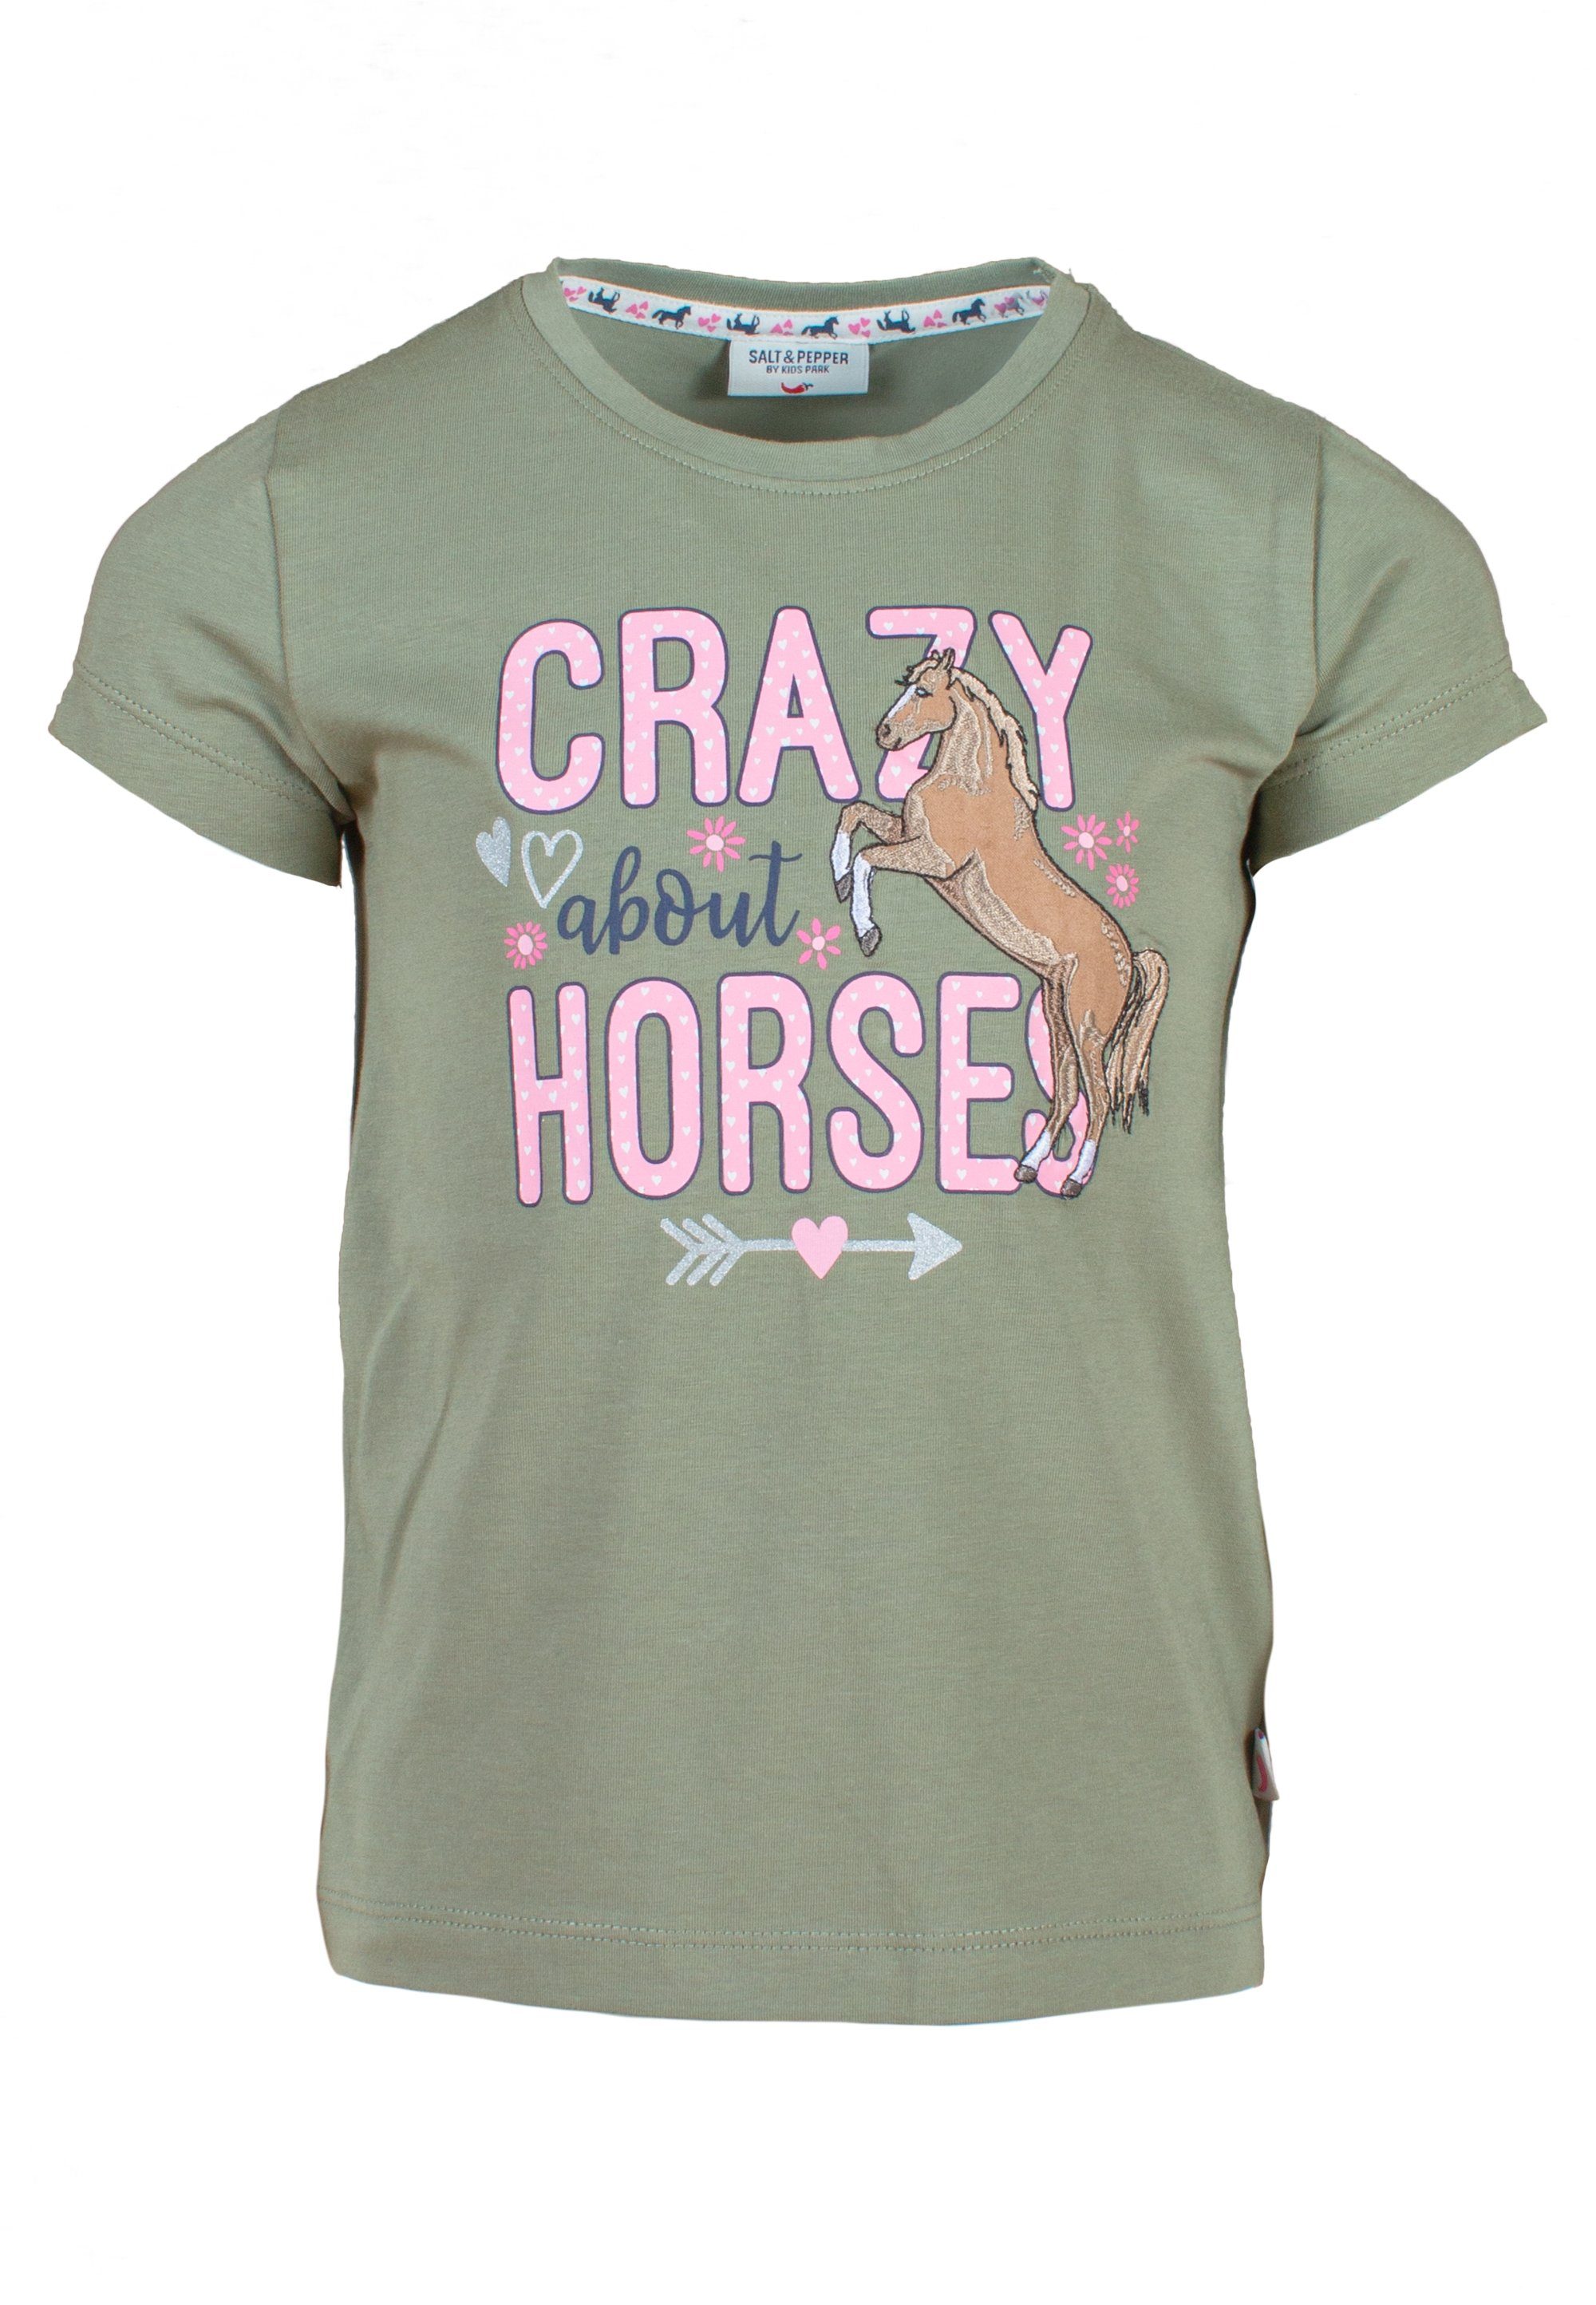 SALT AND mit PEPPER Pferde-Motiven grün, rosa schönen Horses (2-tlg) Crazy T-Shirt